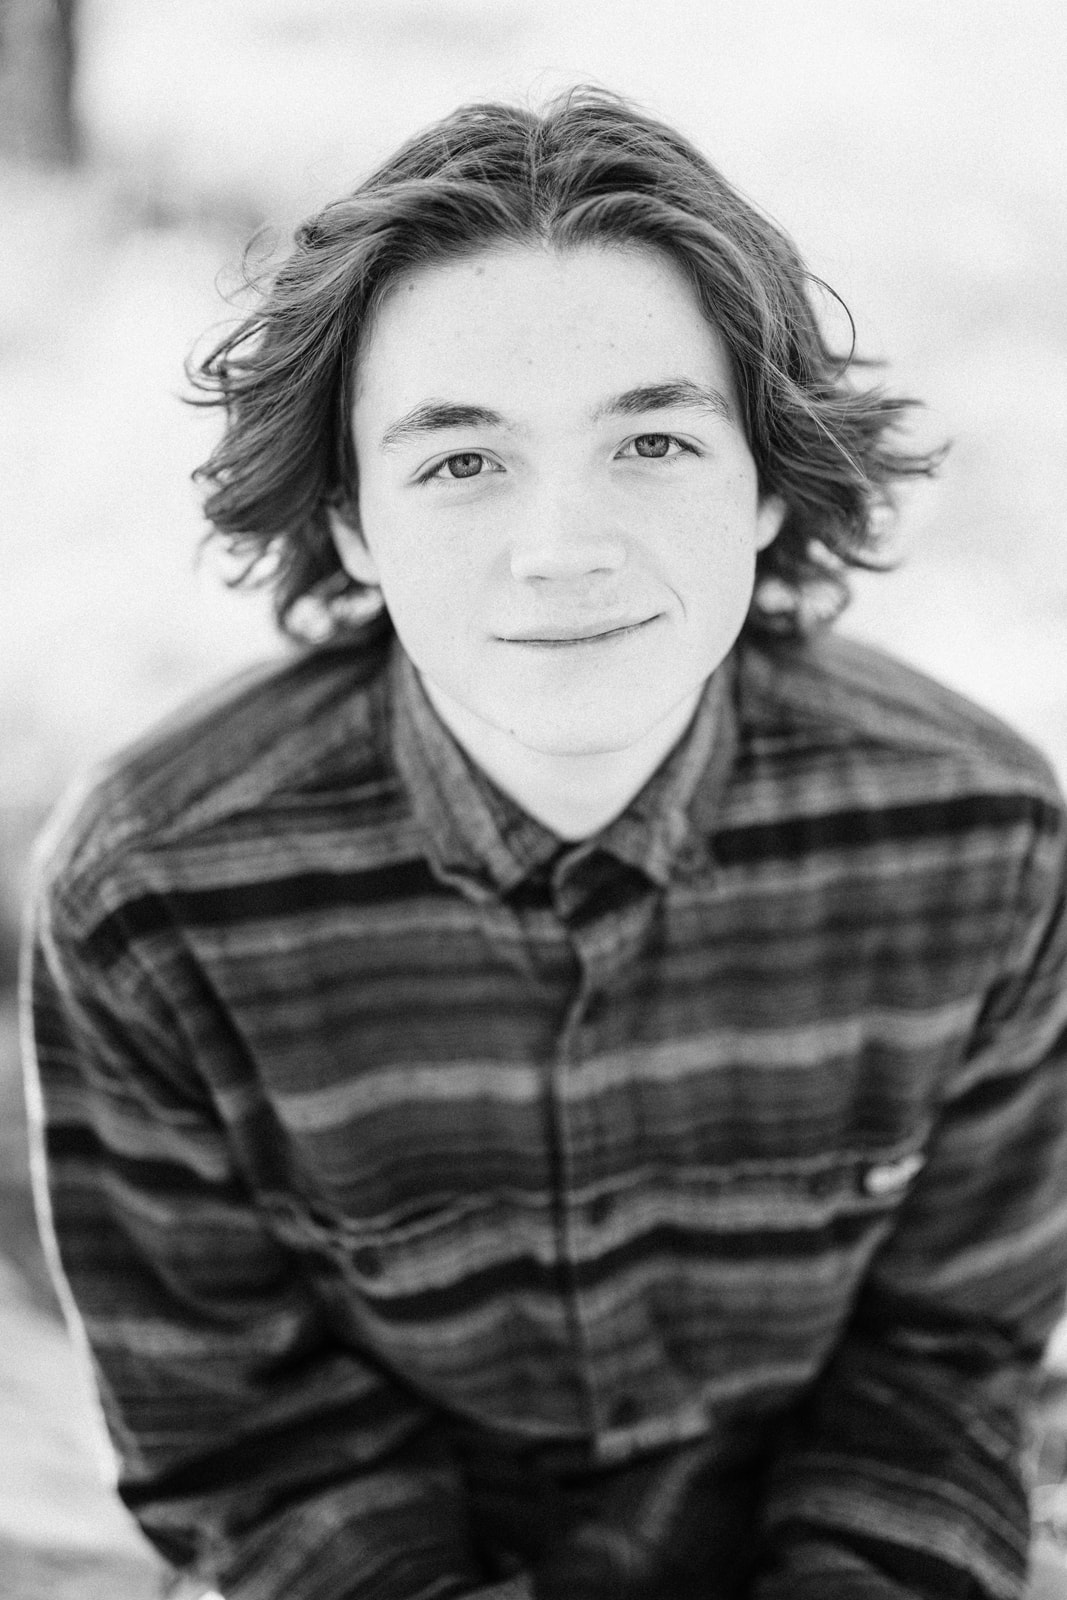 Portrait of senior boy in black and white